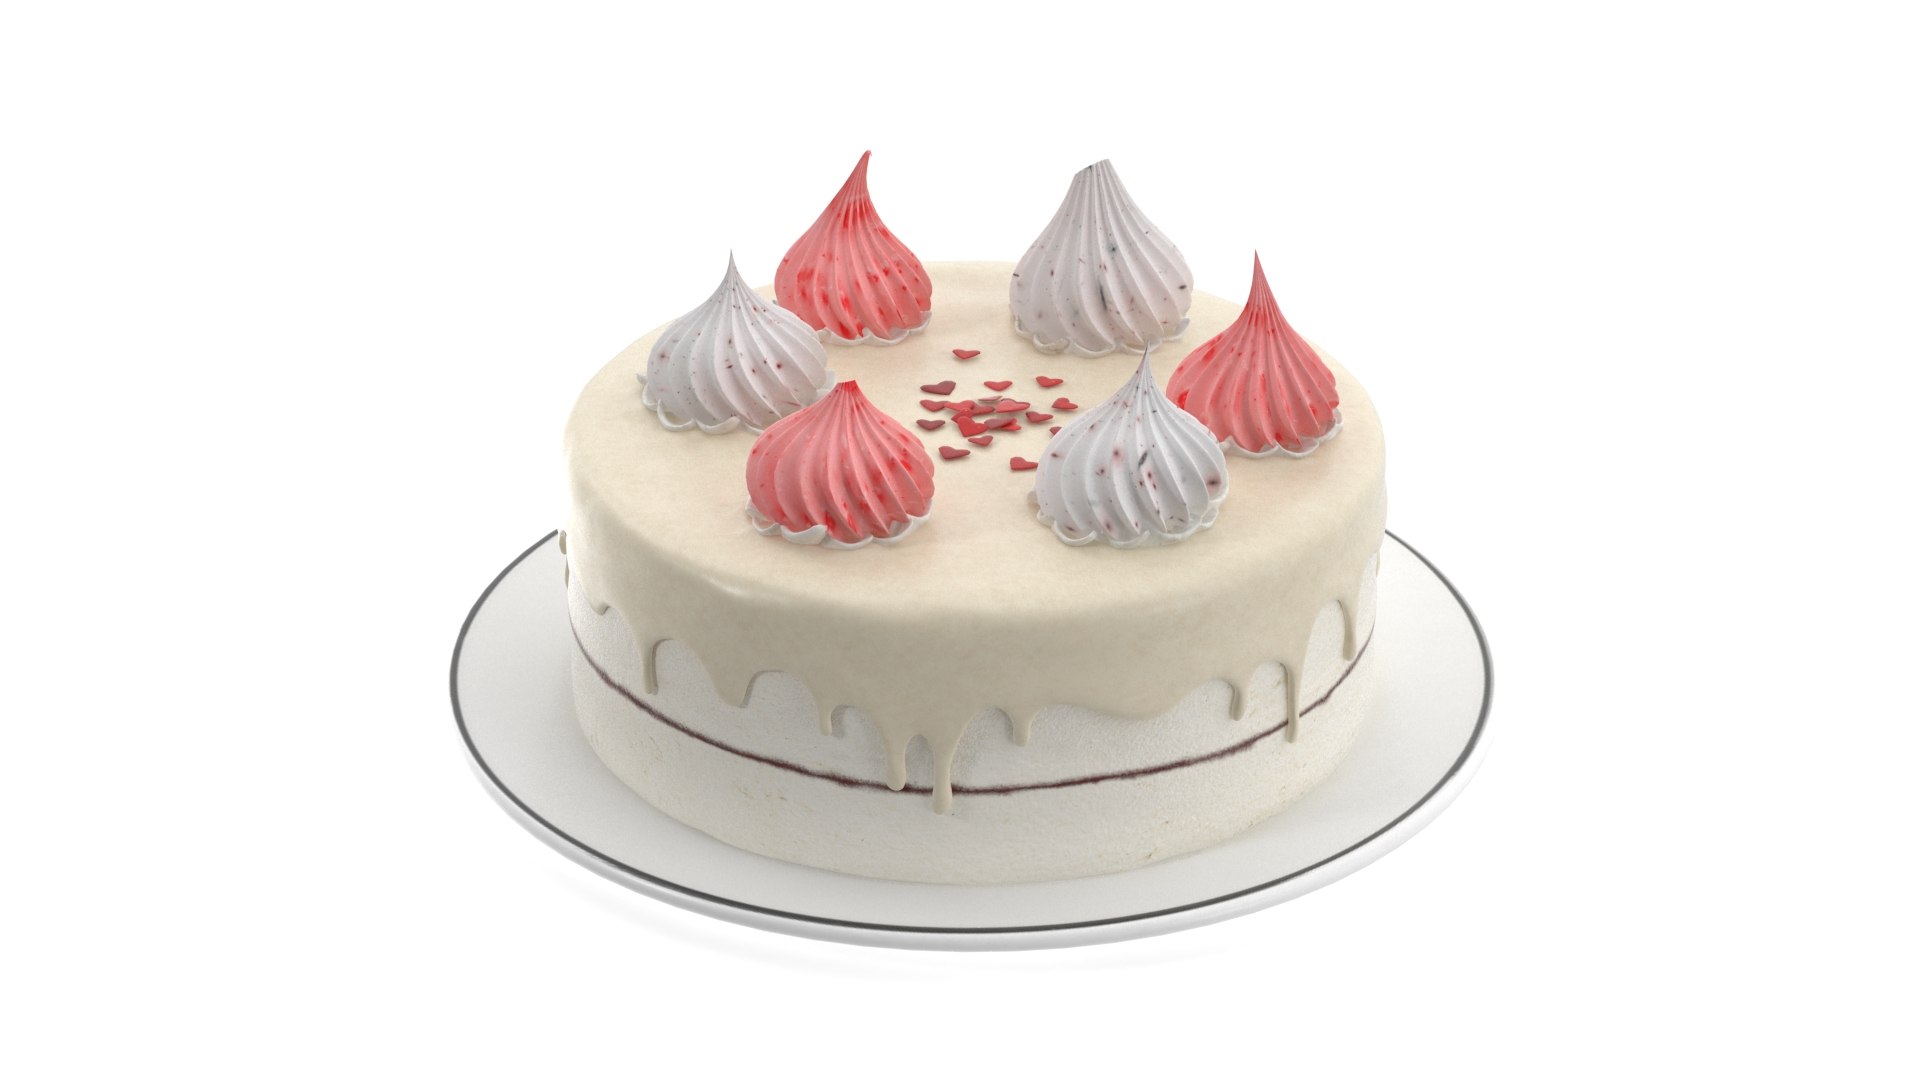 Ice Cream Cake - CG inspiration - 3DModels.org